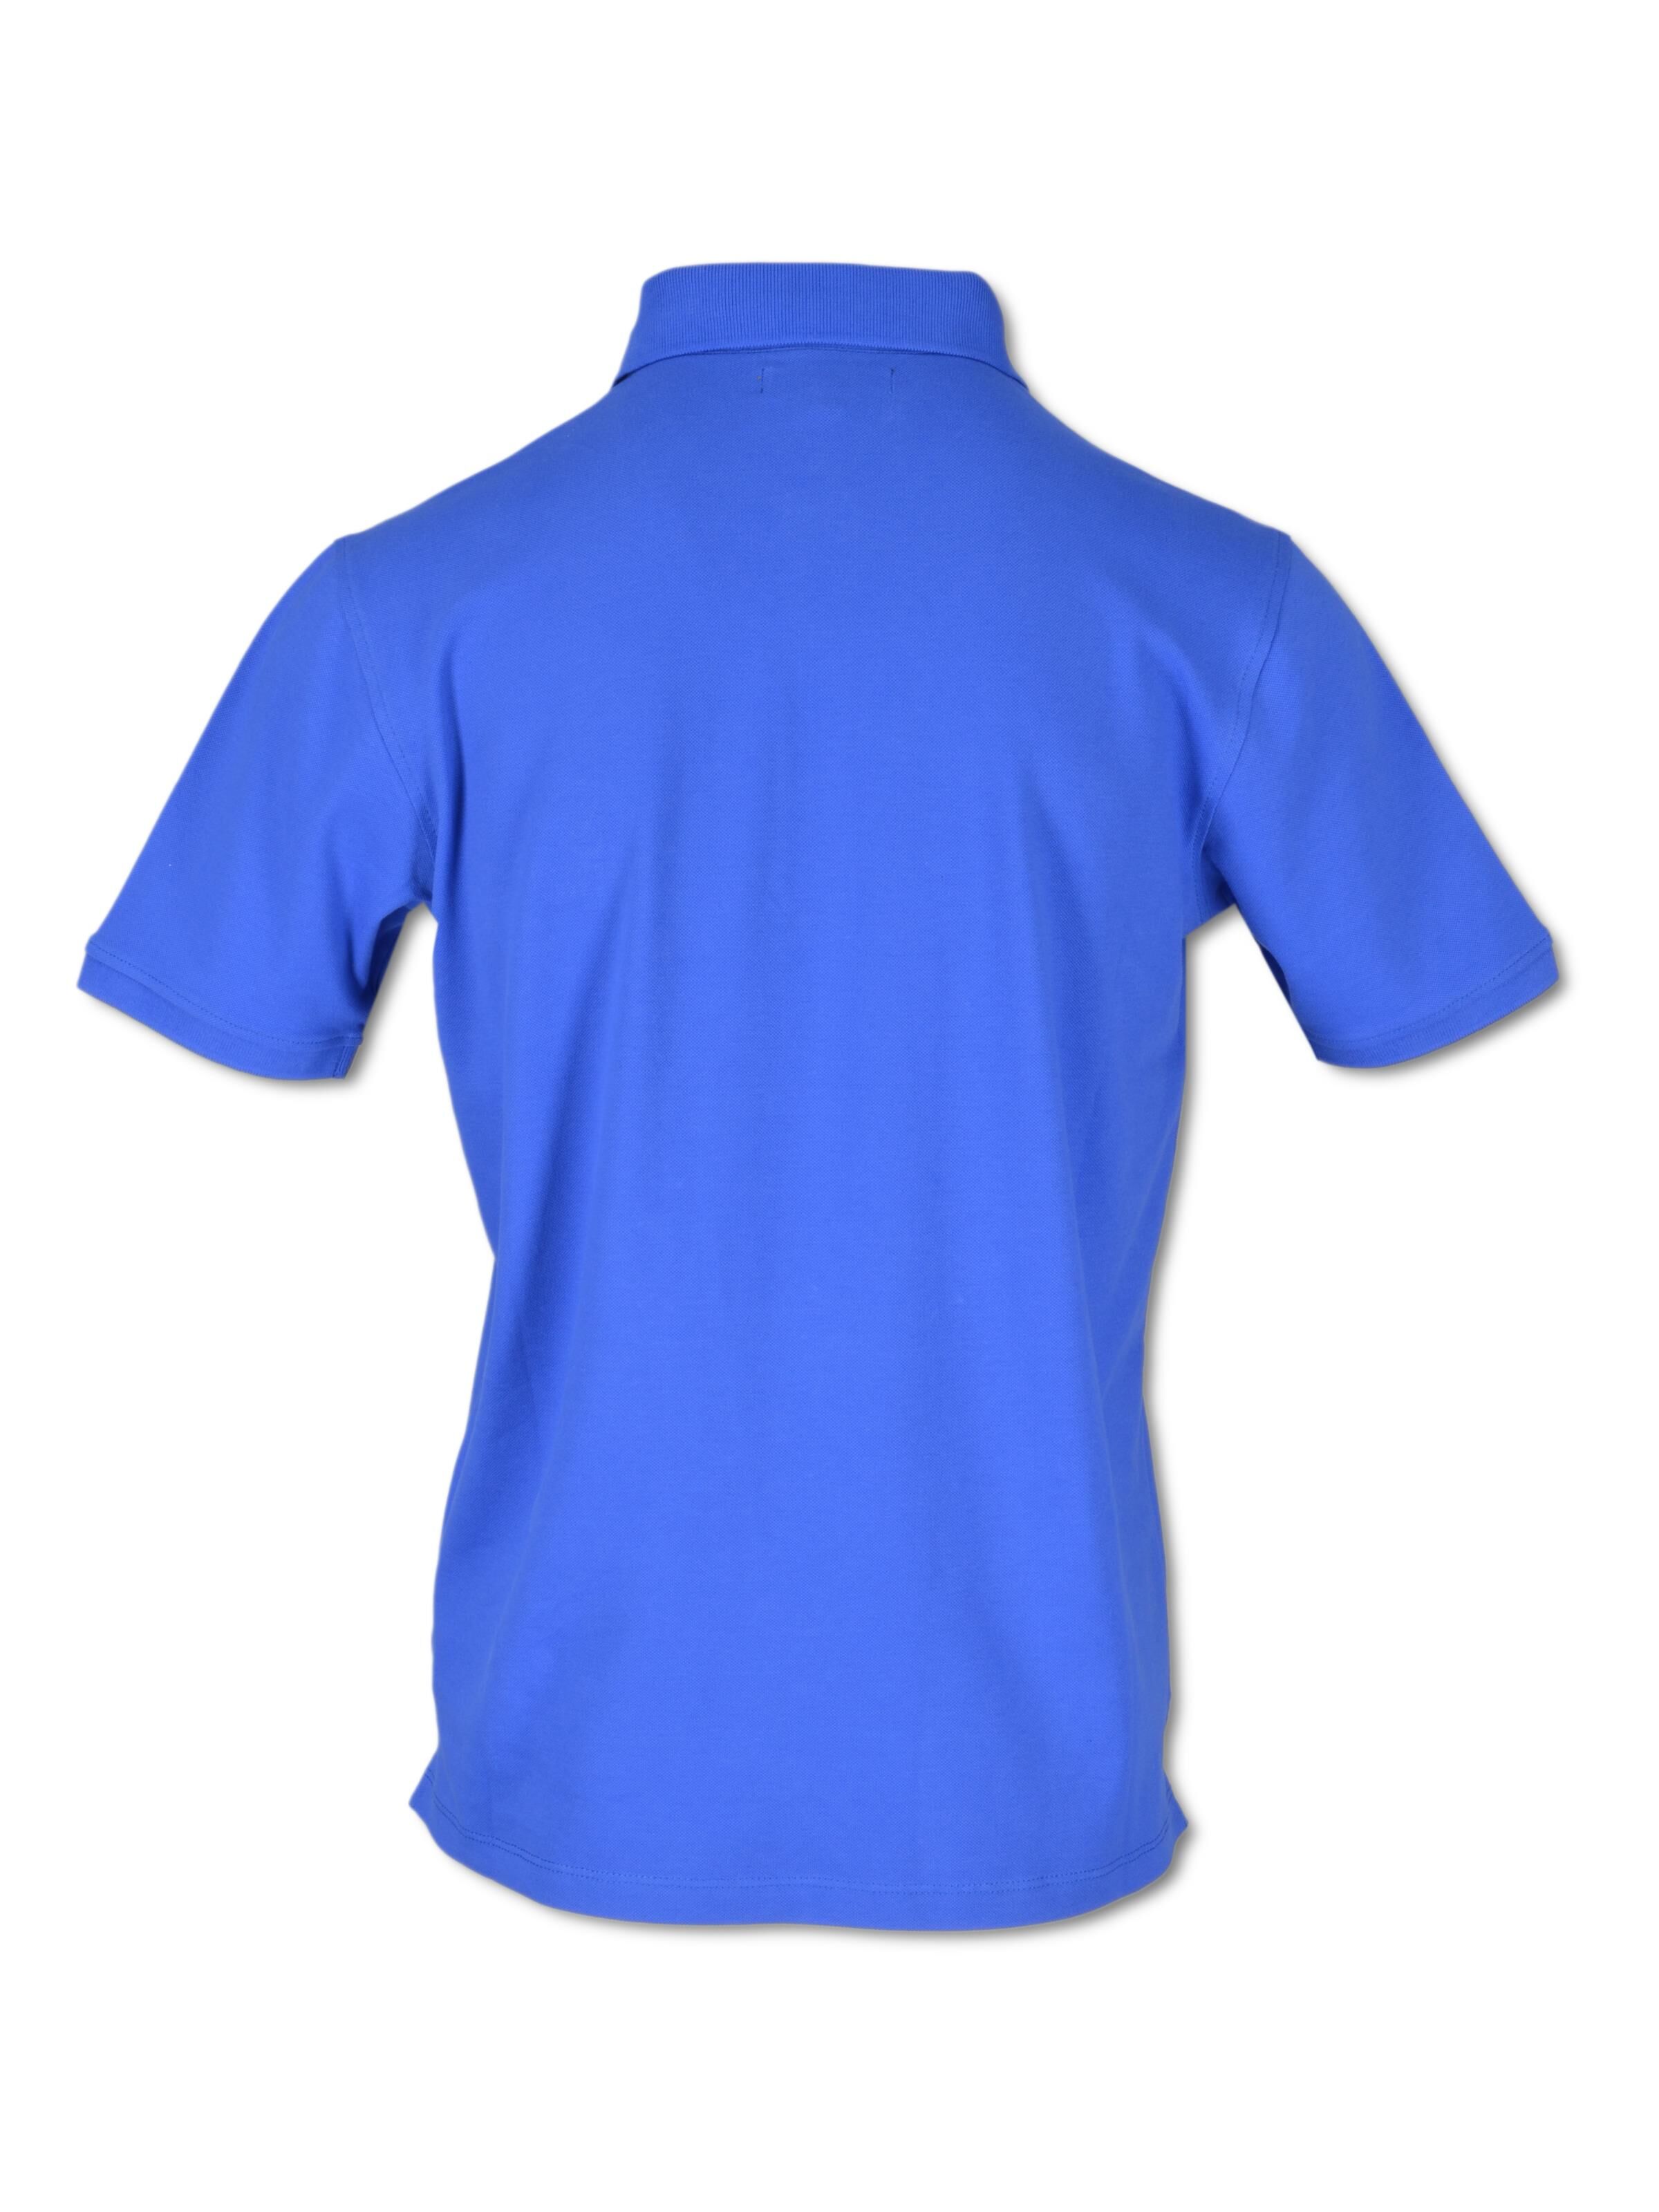 Unifarbenes Poloshirt mit Logo in Kontrastfarben